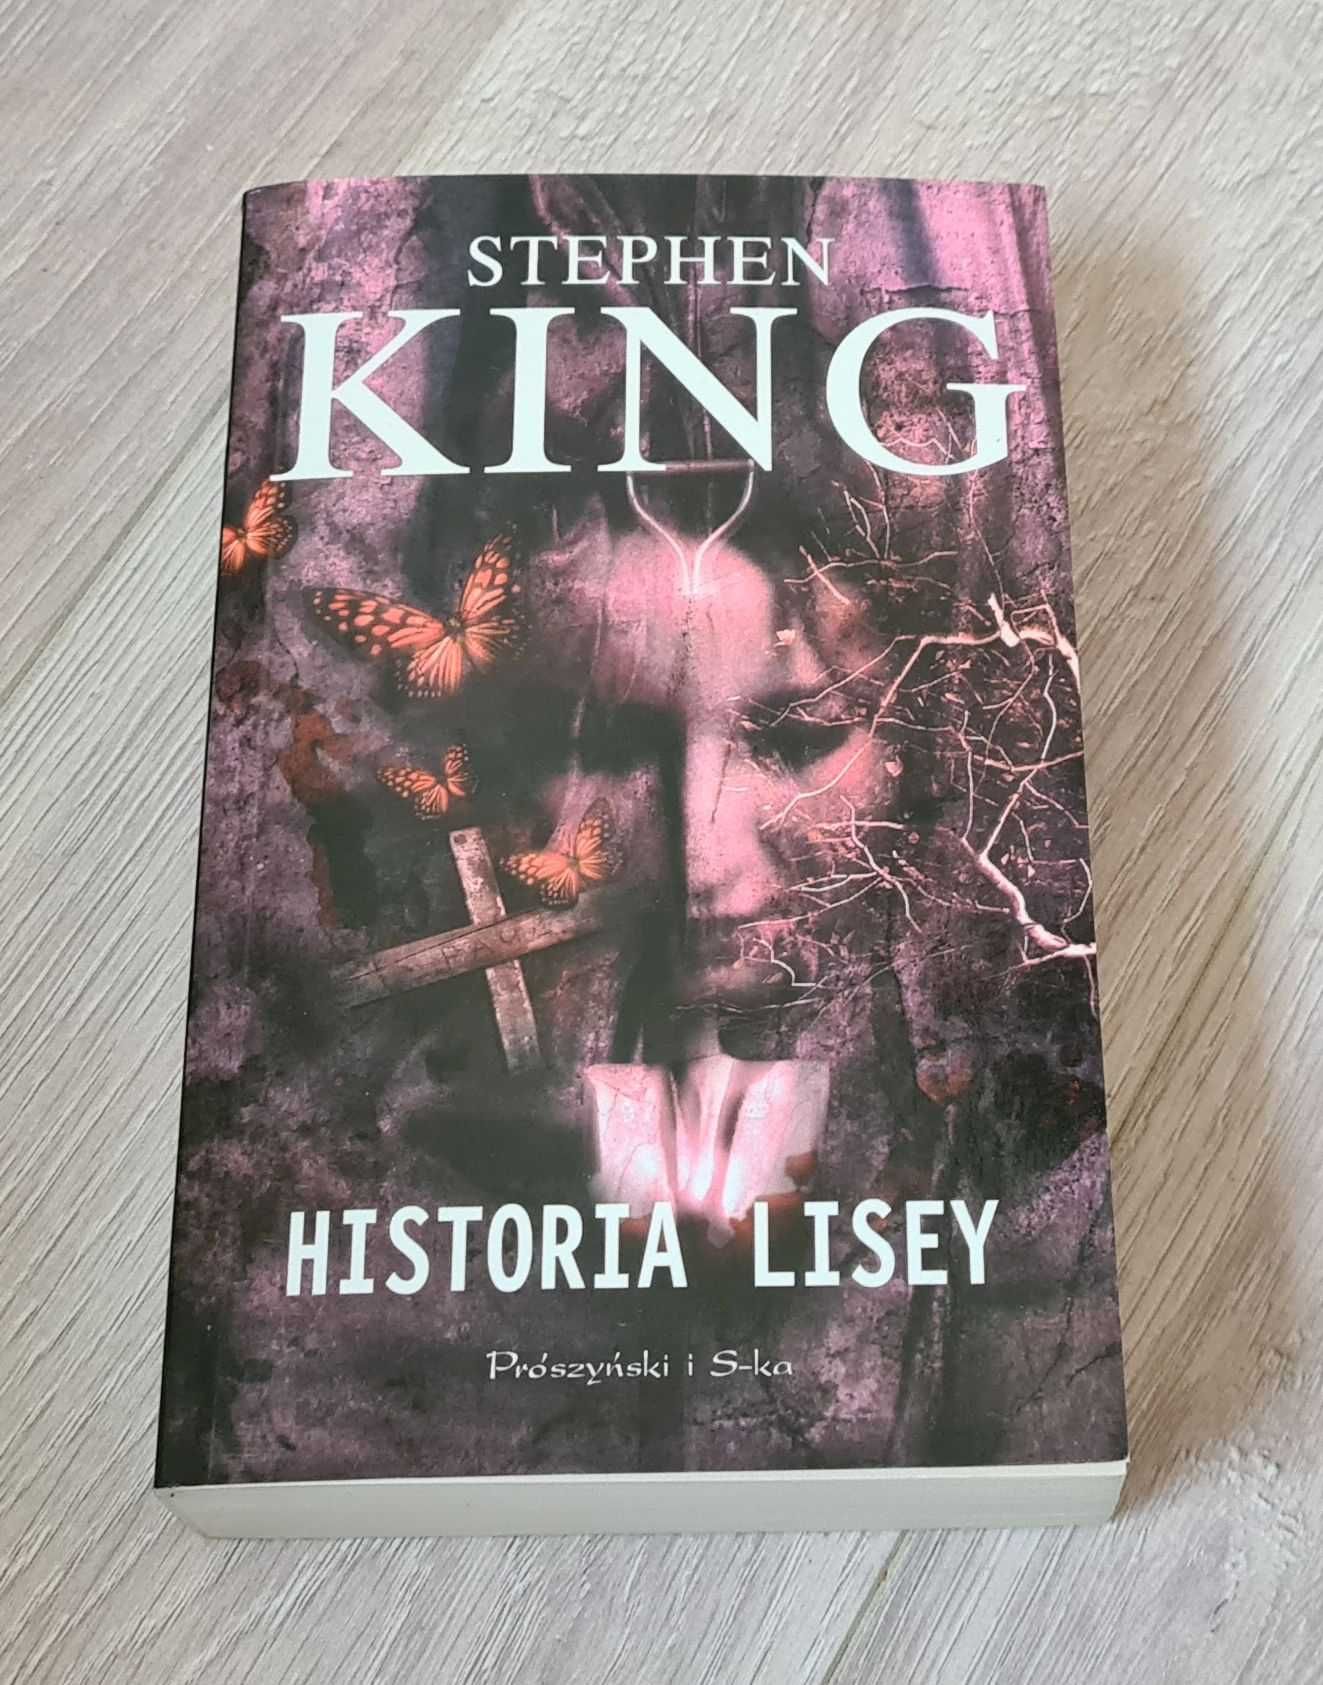 Historia Lisey - Stephen King